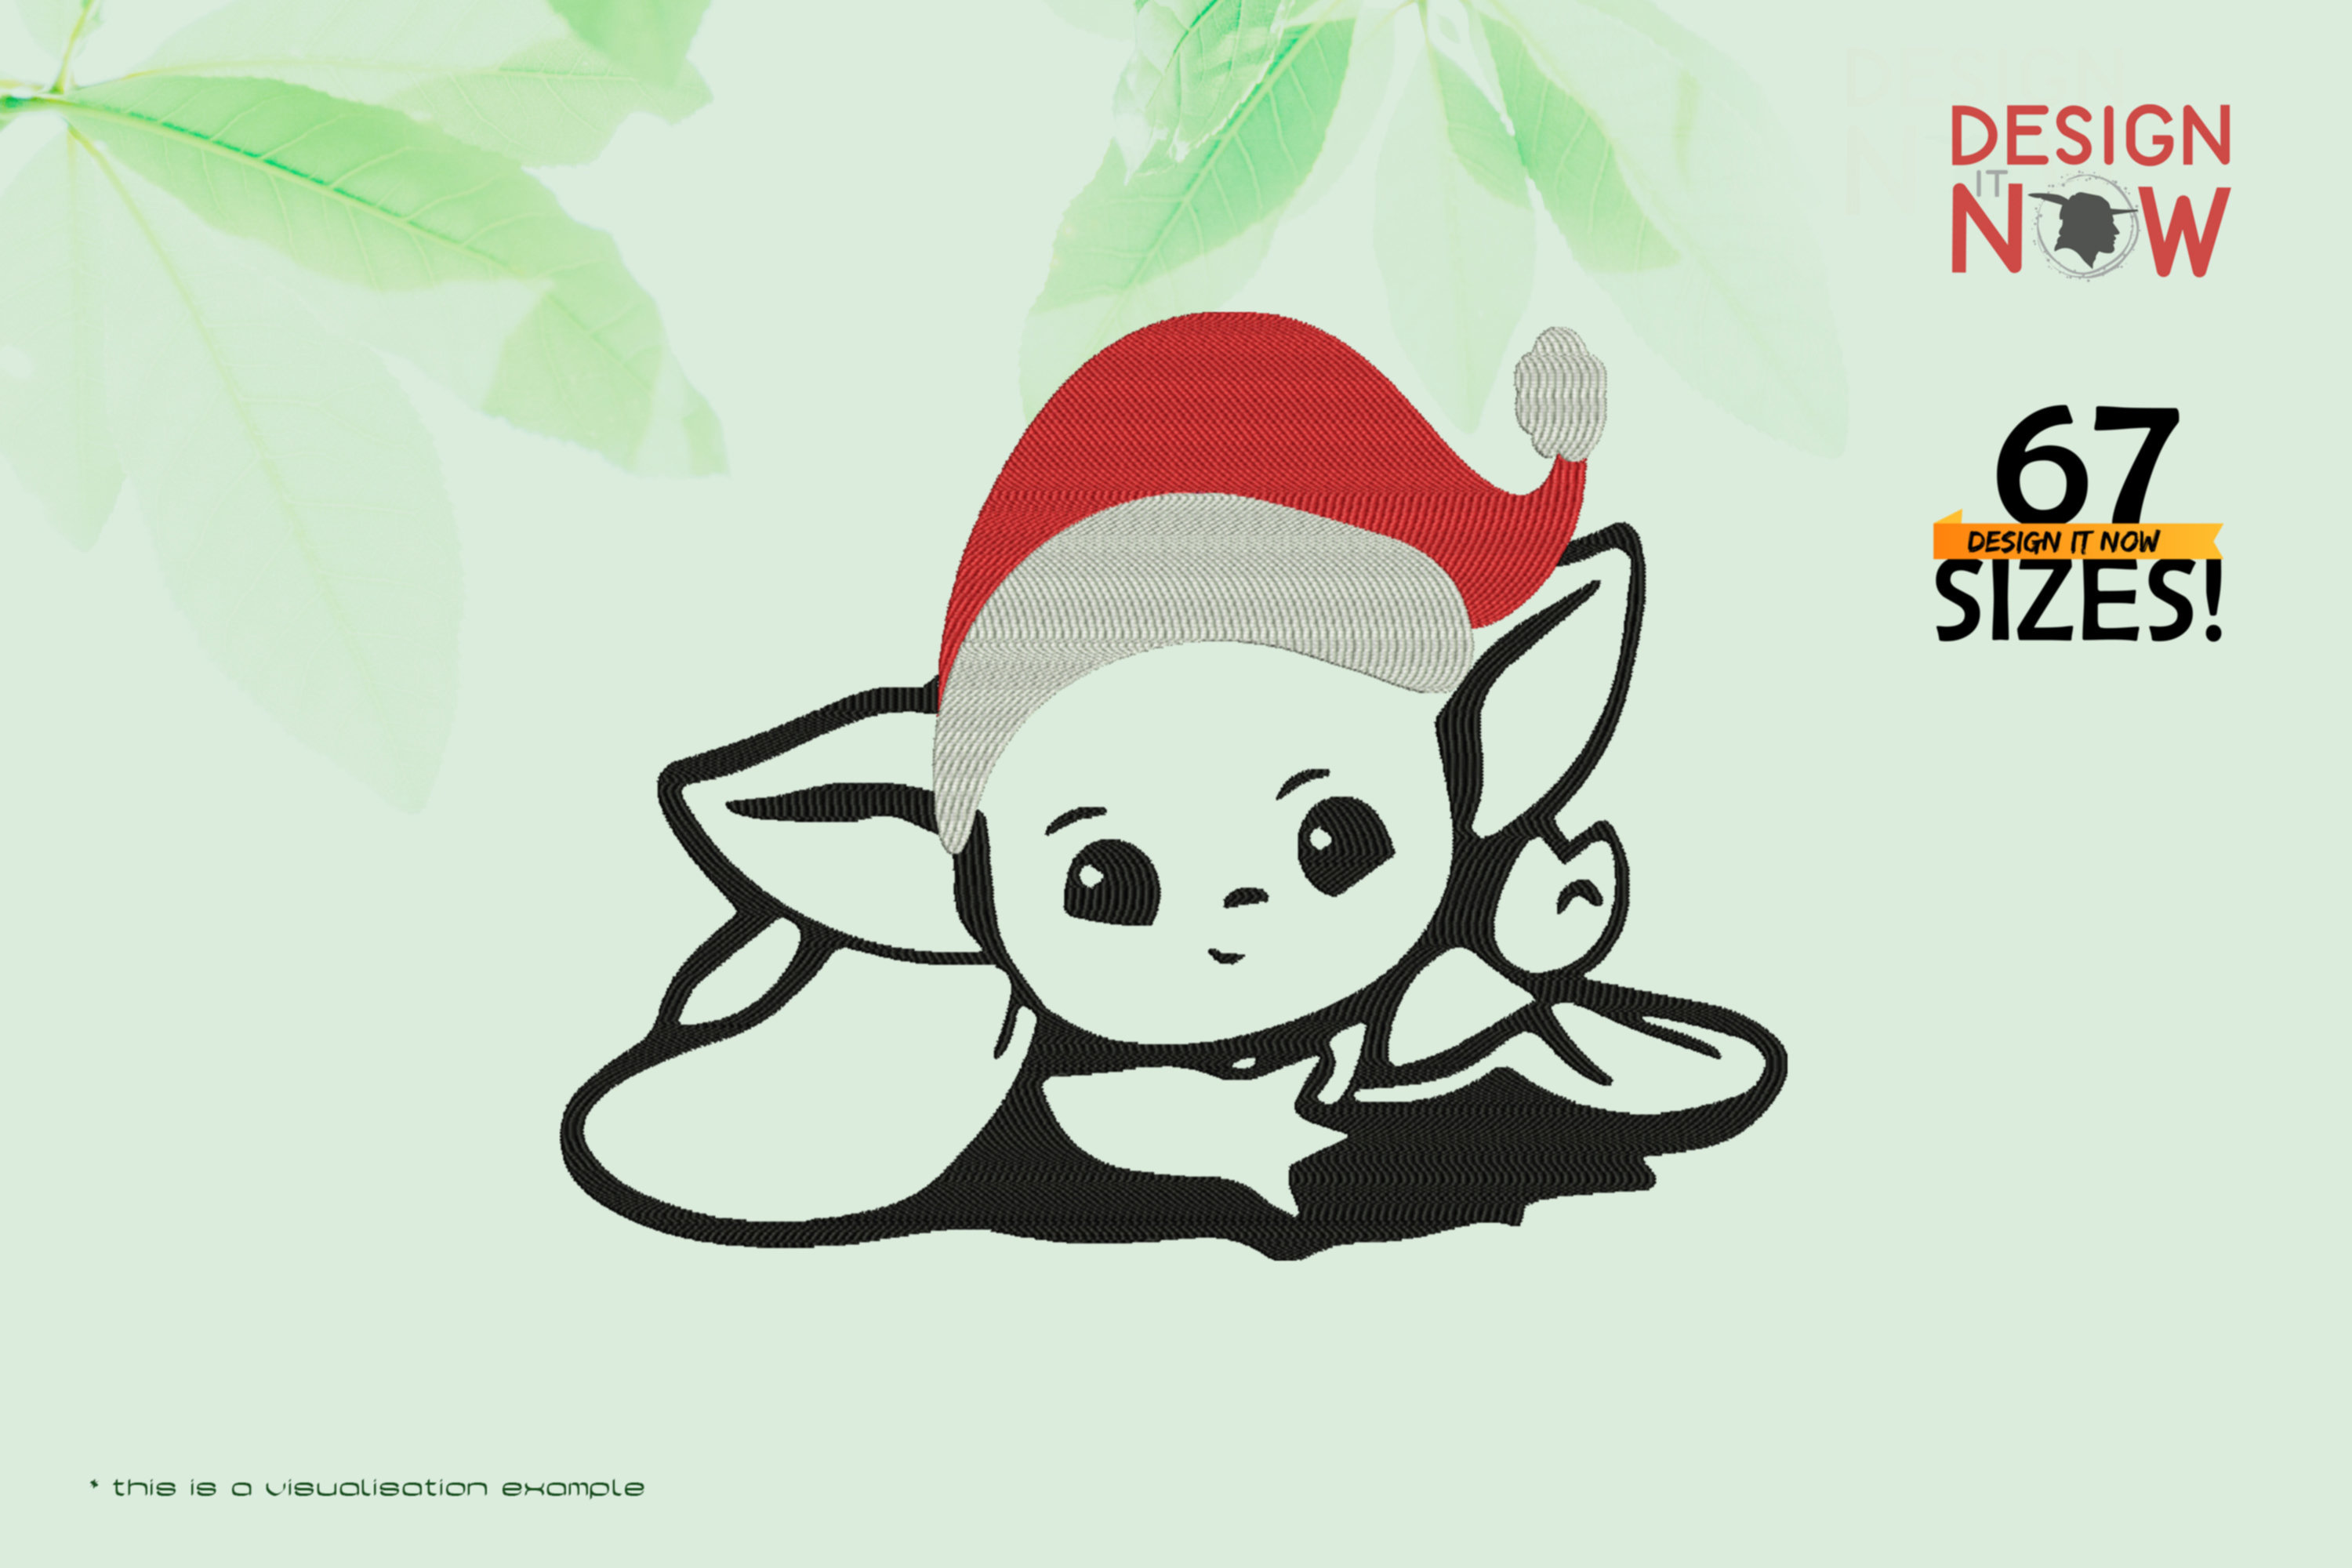 Tribute To Fictional Character Grogu aka Baby Yoda (Santa Claus Baby)